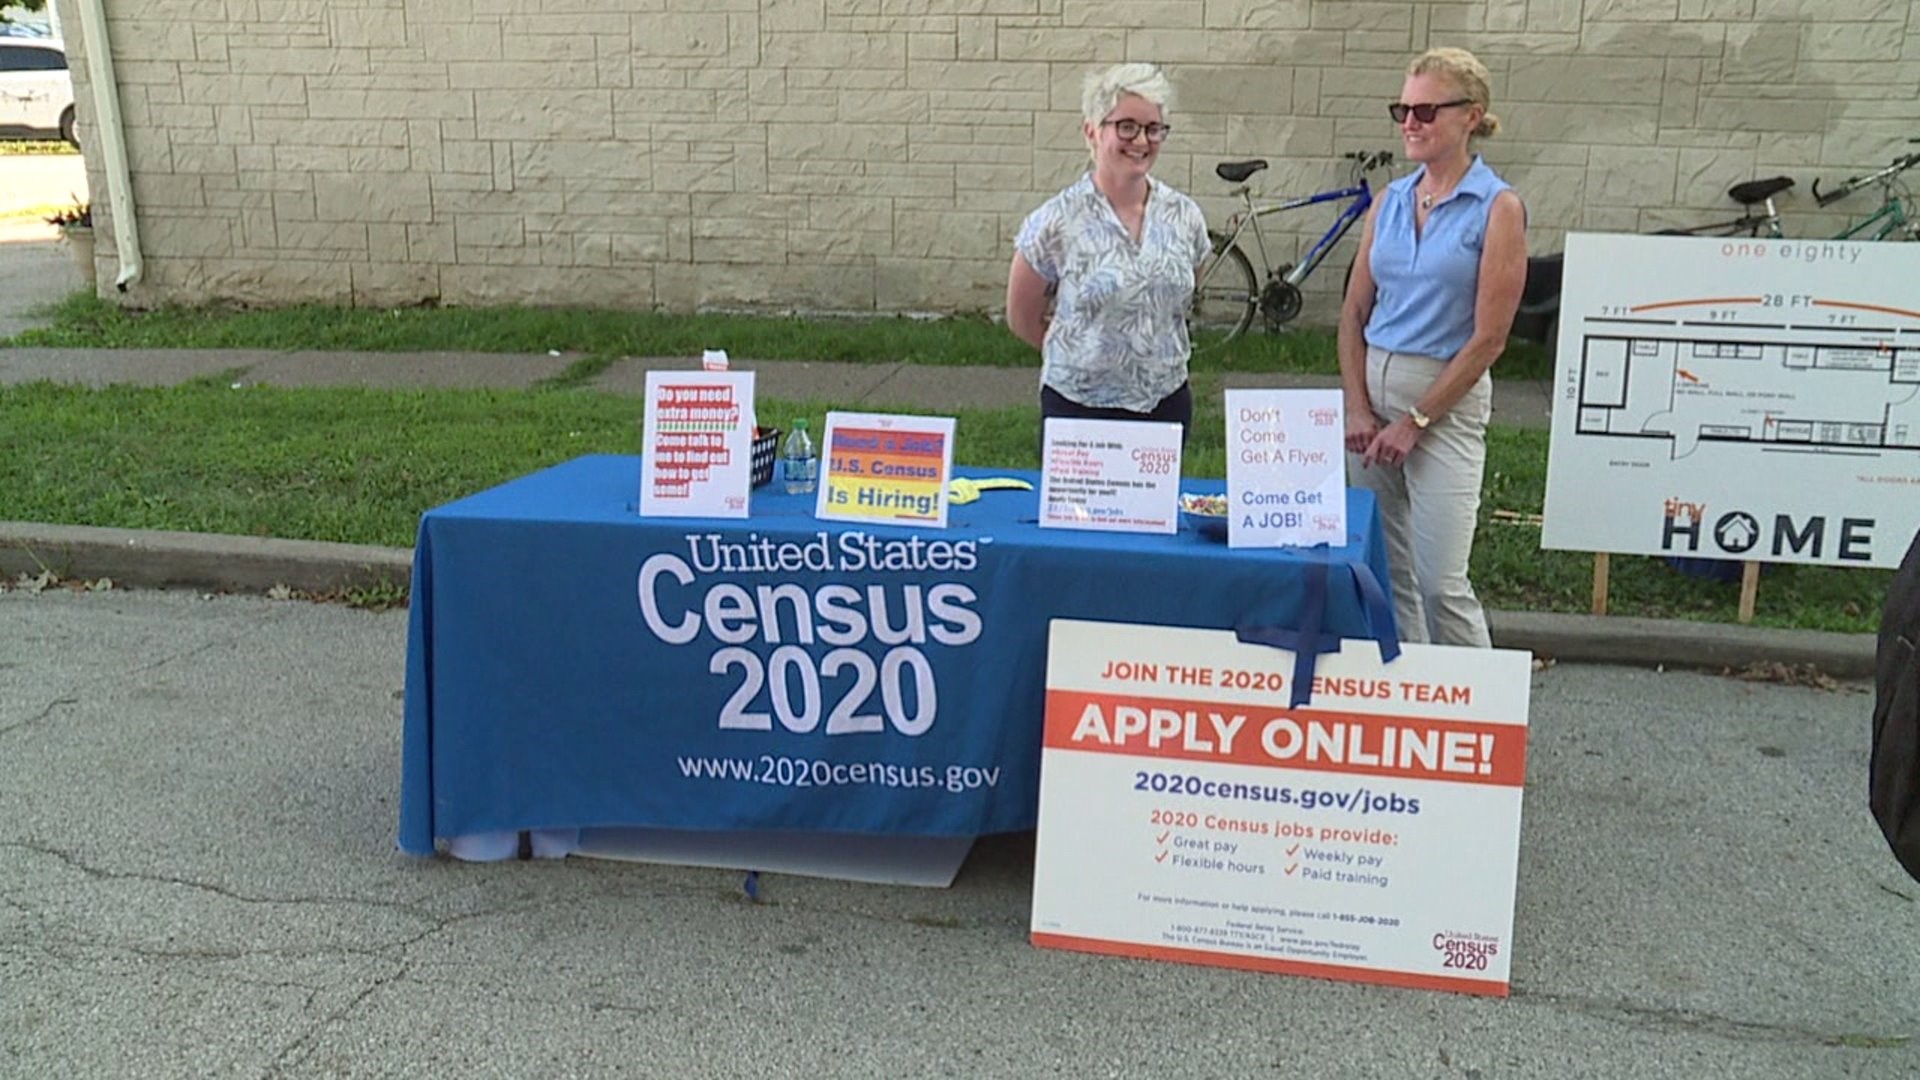 Davenport Leaders encourage participation in 2020 census